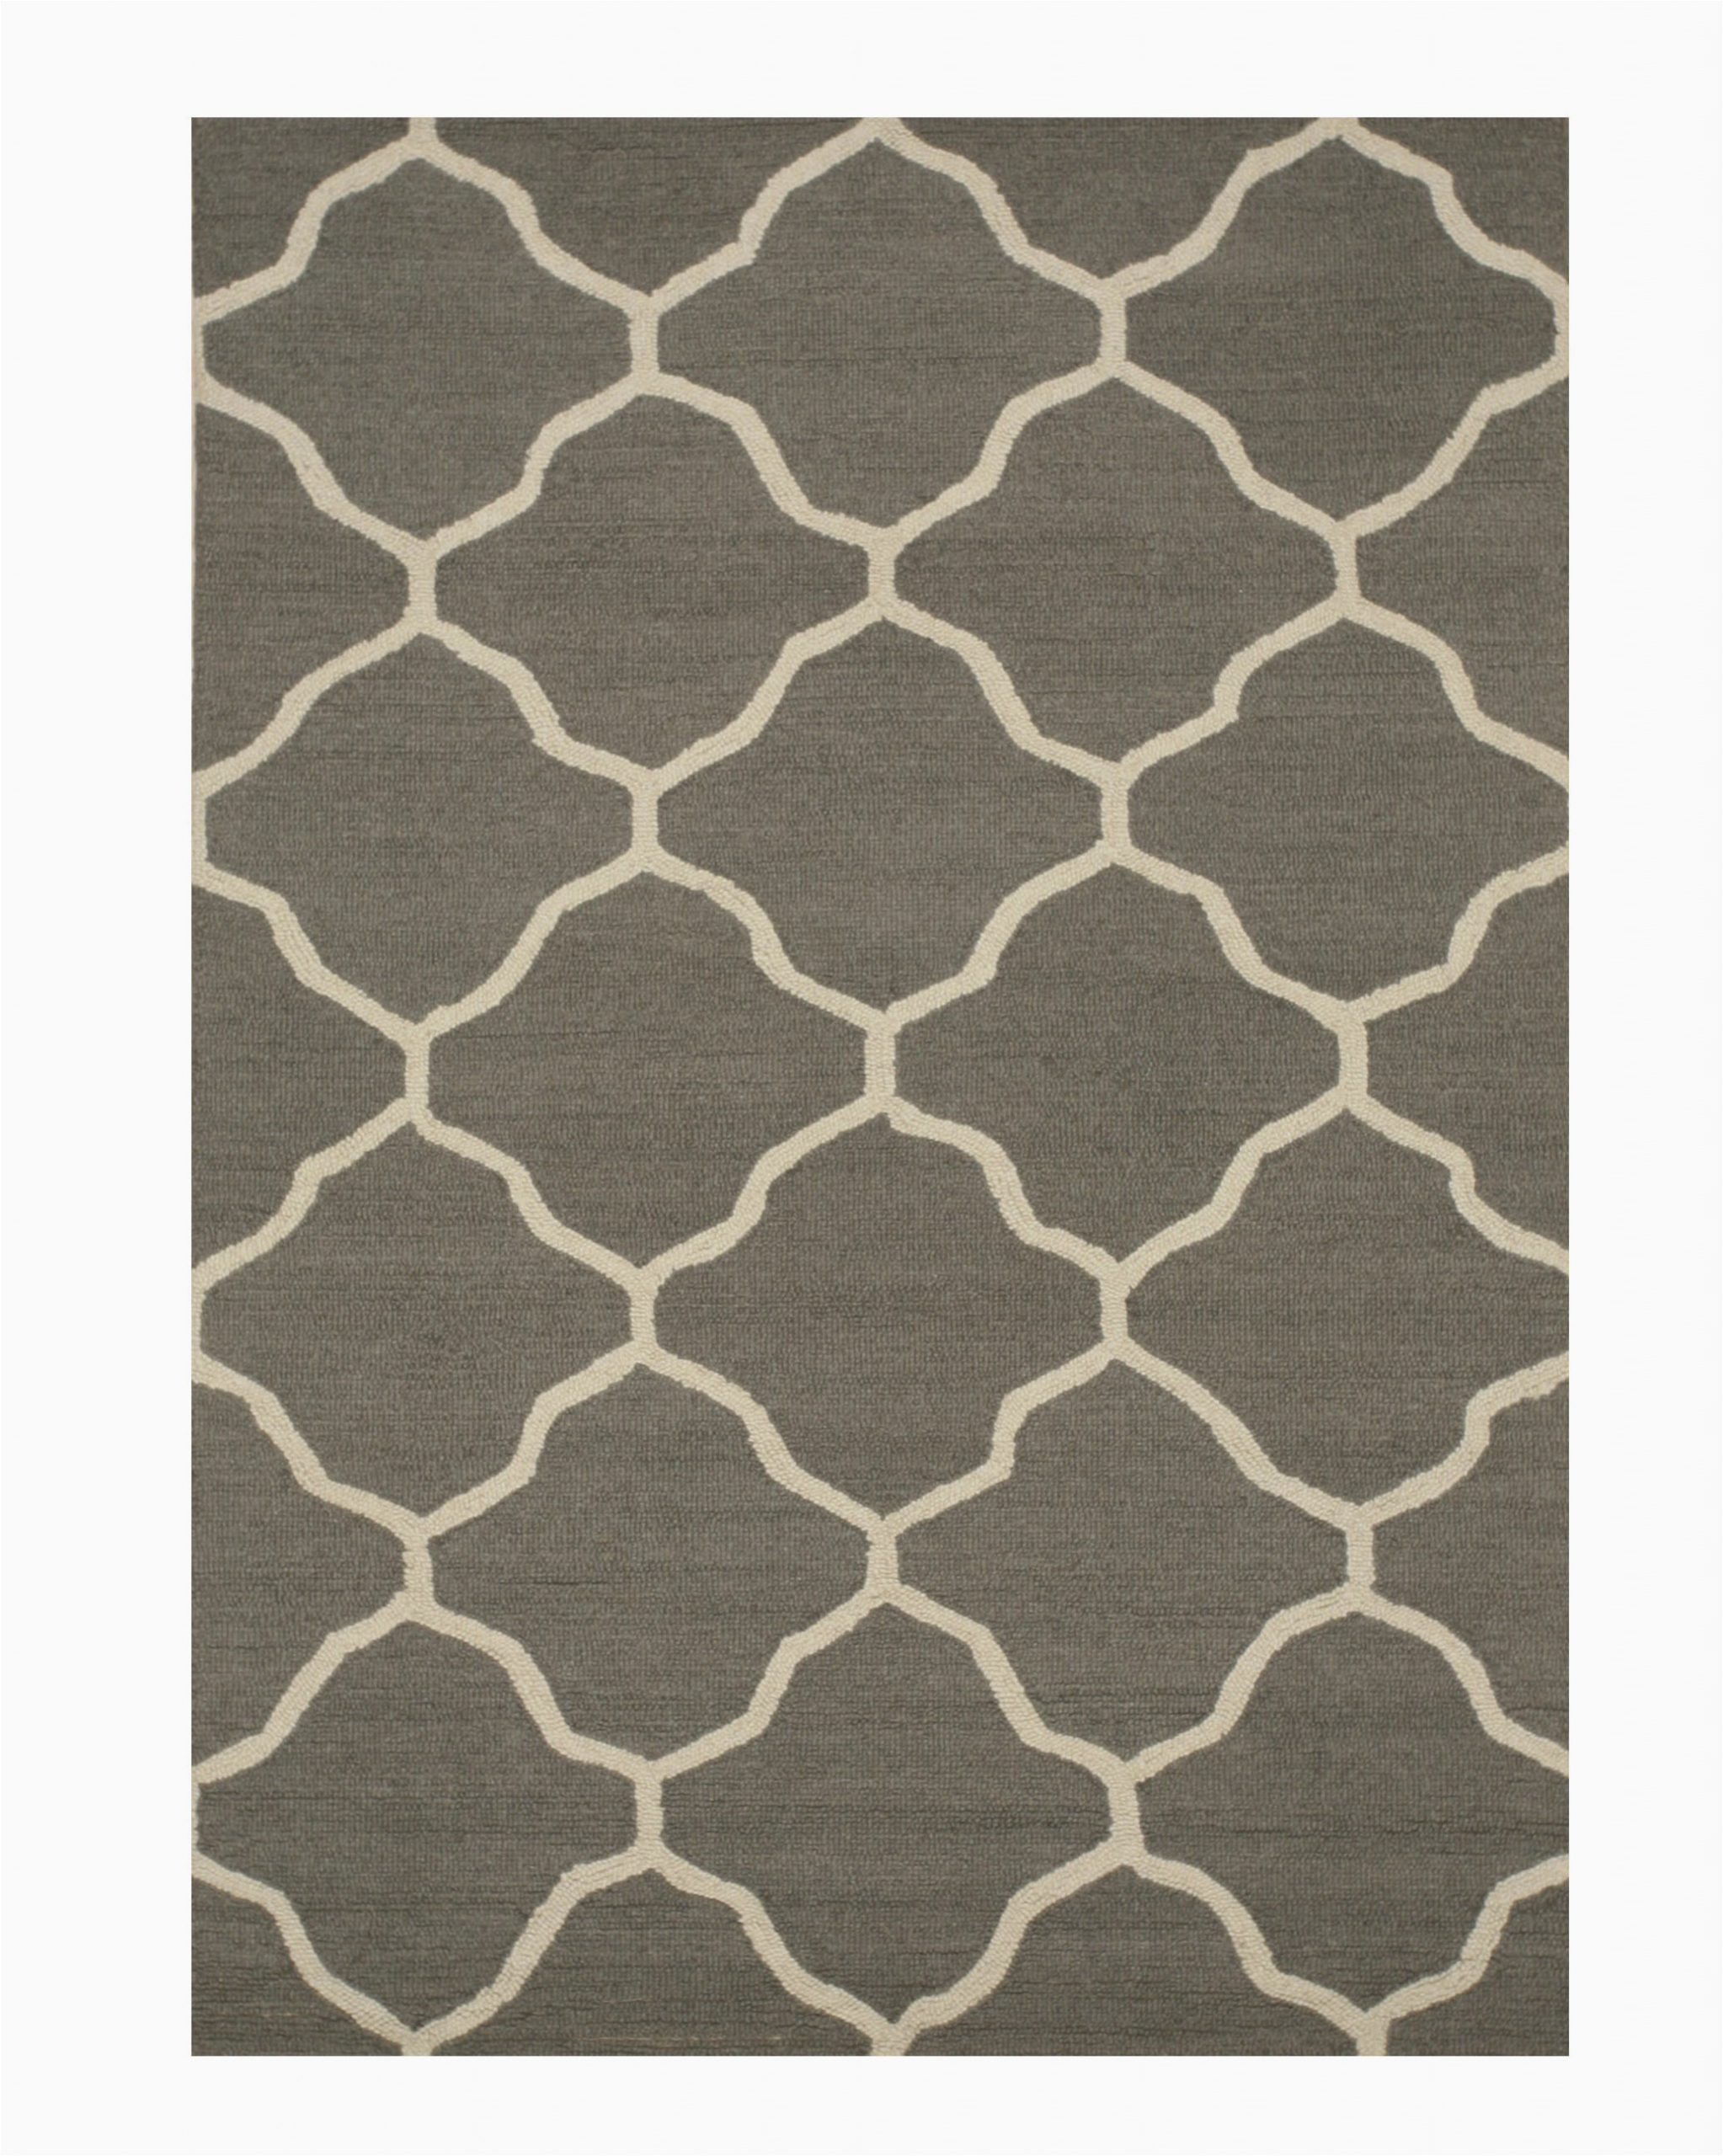 durrant handmade tufted 5 x 7 wool gray area rug